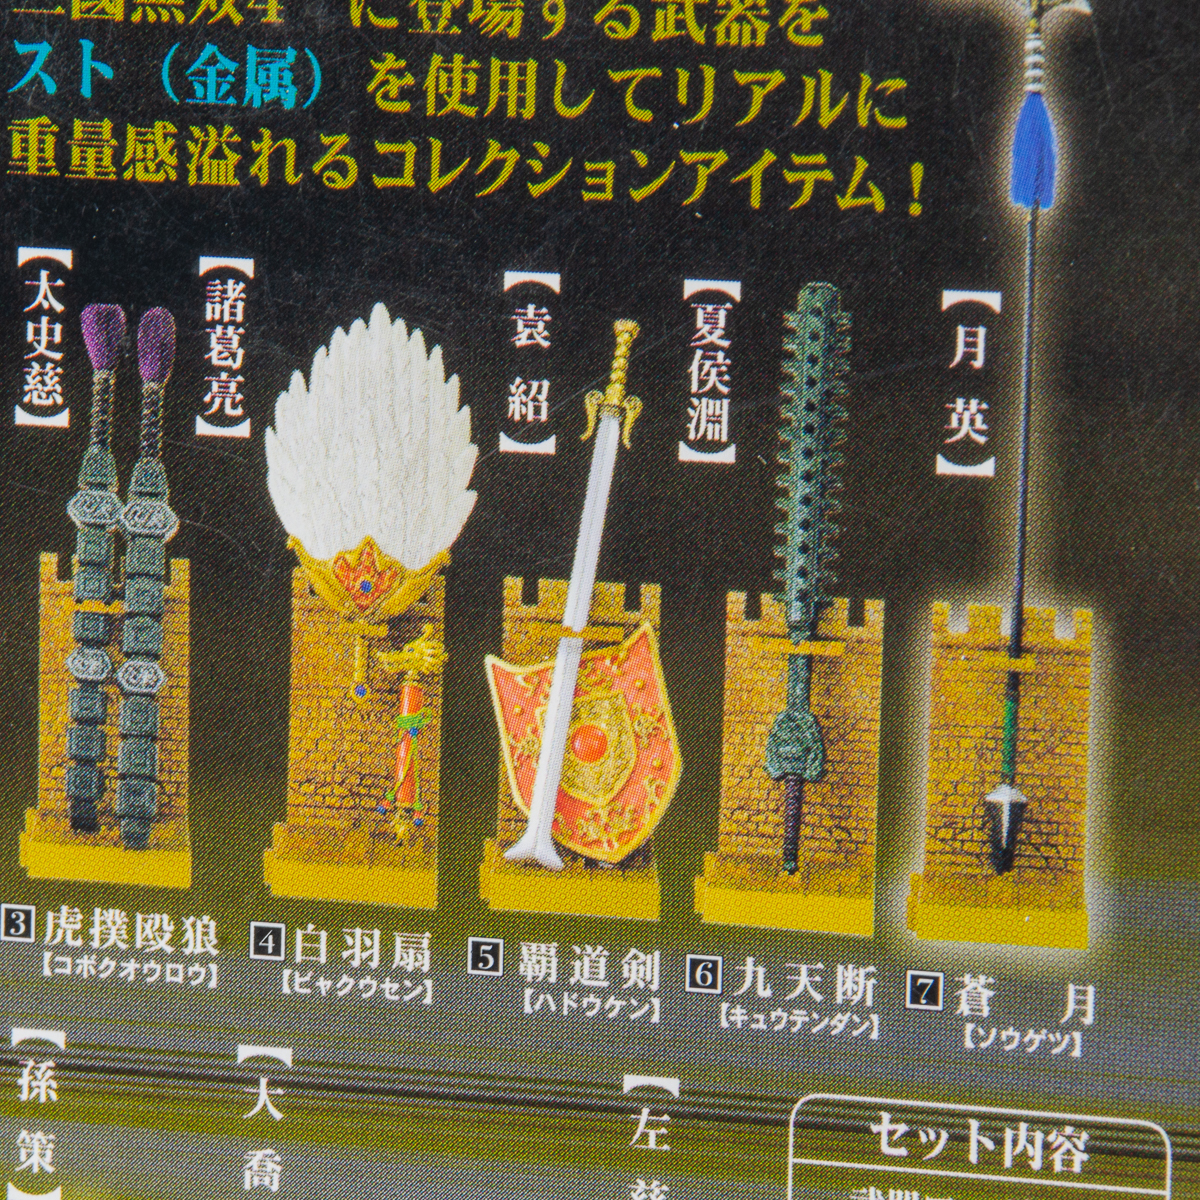 5 pcs ~ free shipping new goods MSJ Meister Japan genuine * Sangokumusou 4 weapon large all ... road .( is dou ticket ). equipment figure Annals of Three Kingdoms CHORO-Q EMDT